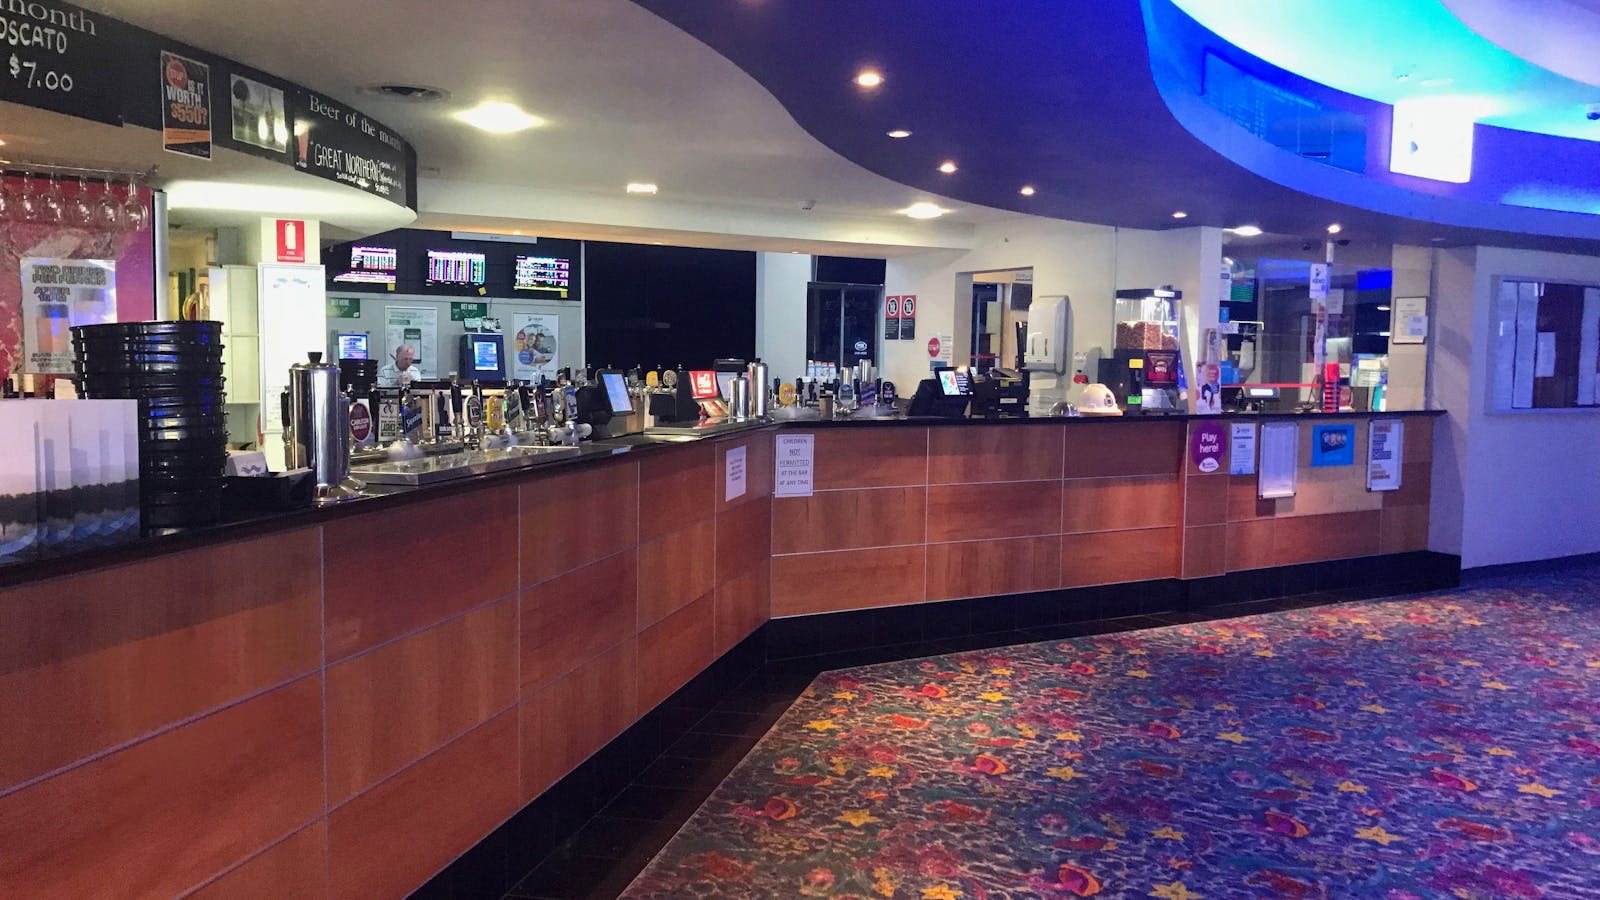 Sussex Inlet RSL Club Main Bar